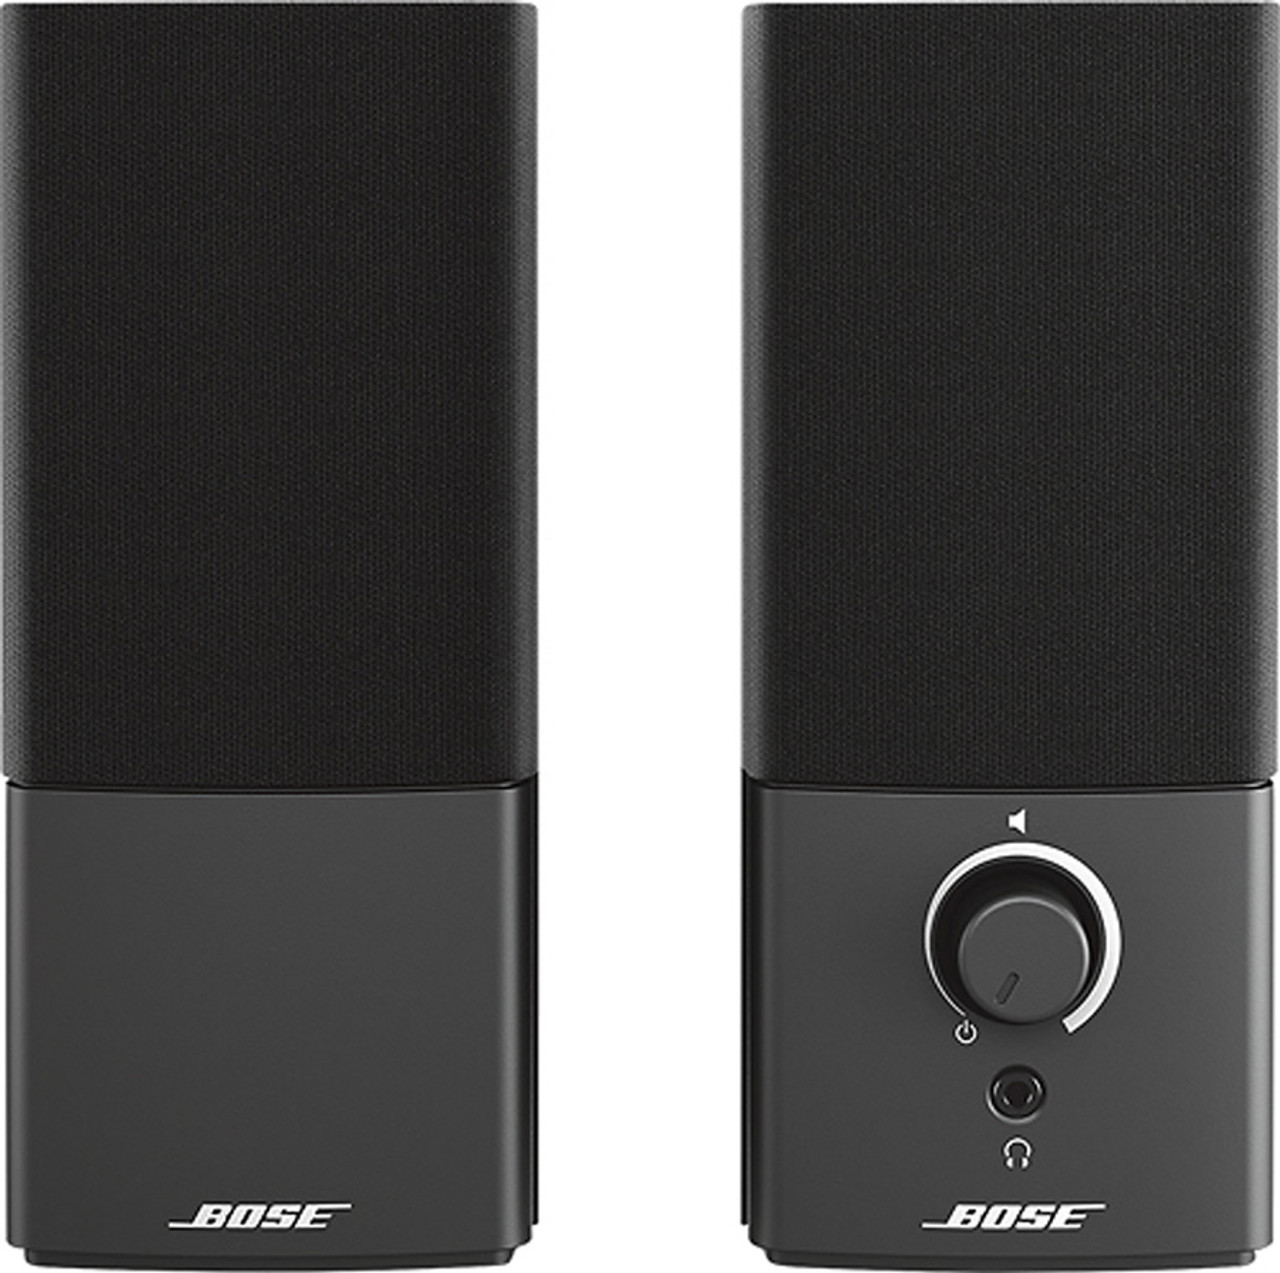 Bose Companion 2 Serie III Speaker Black